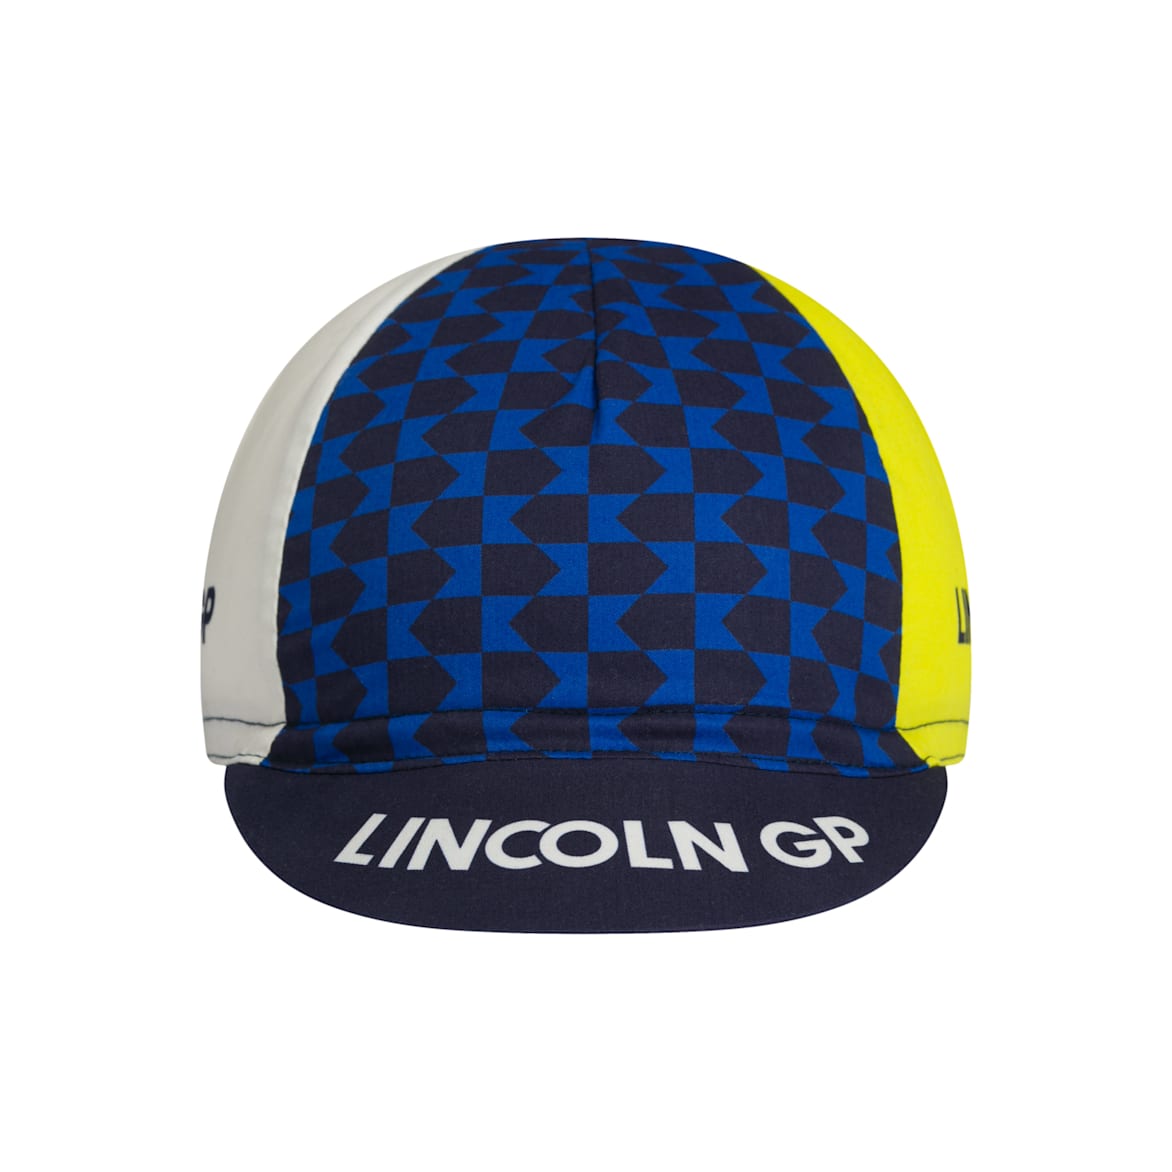 Rapha Lincoln GP Cap